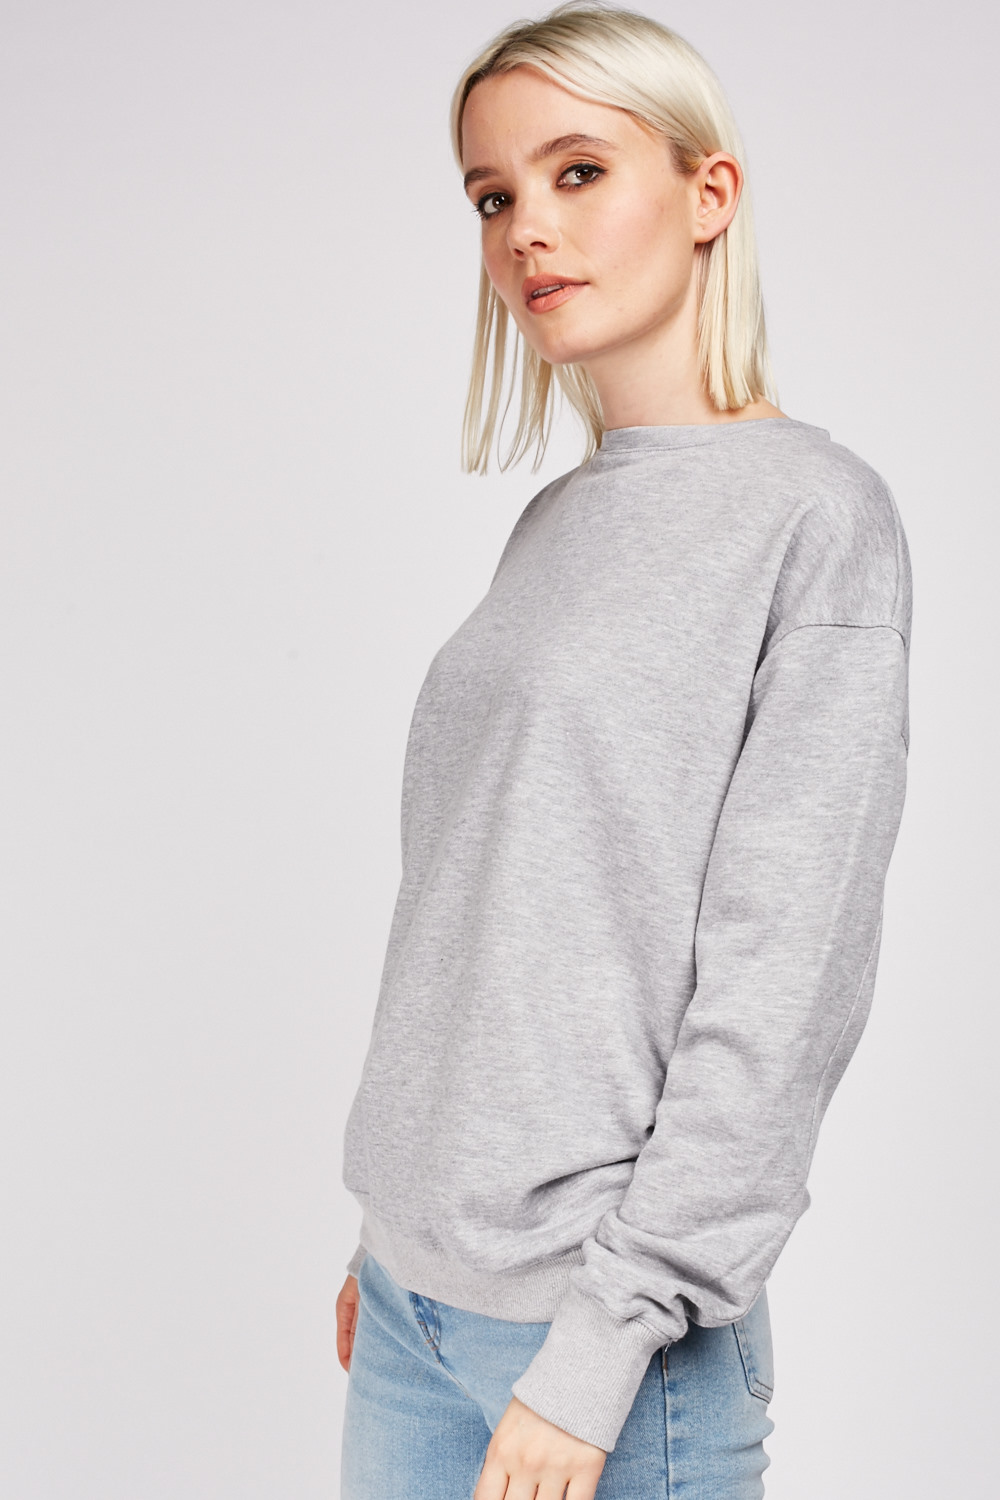 Lace Up Back Sweatshirt - Just $7